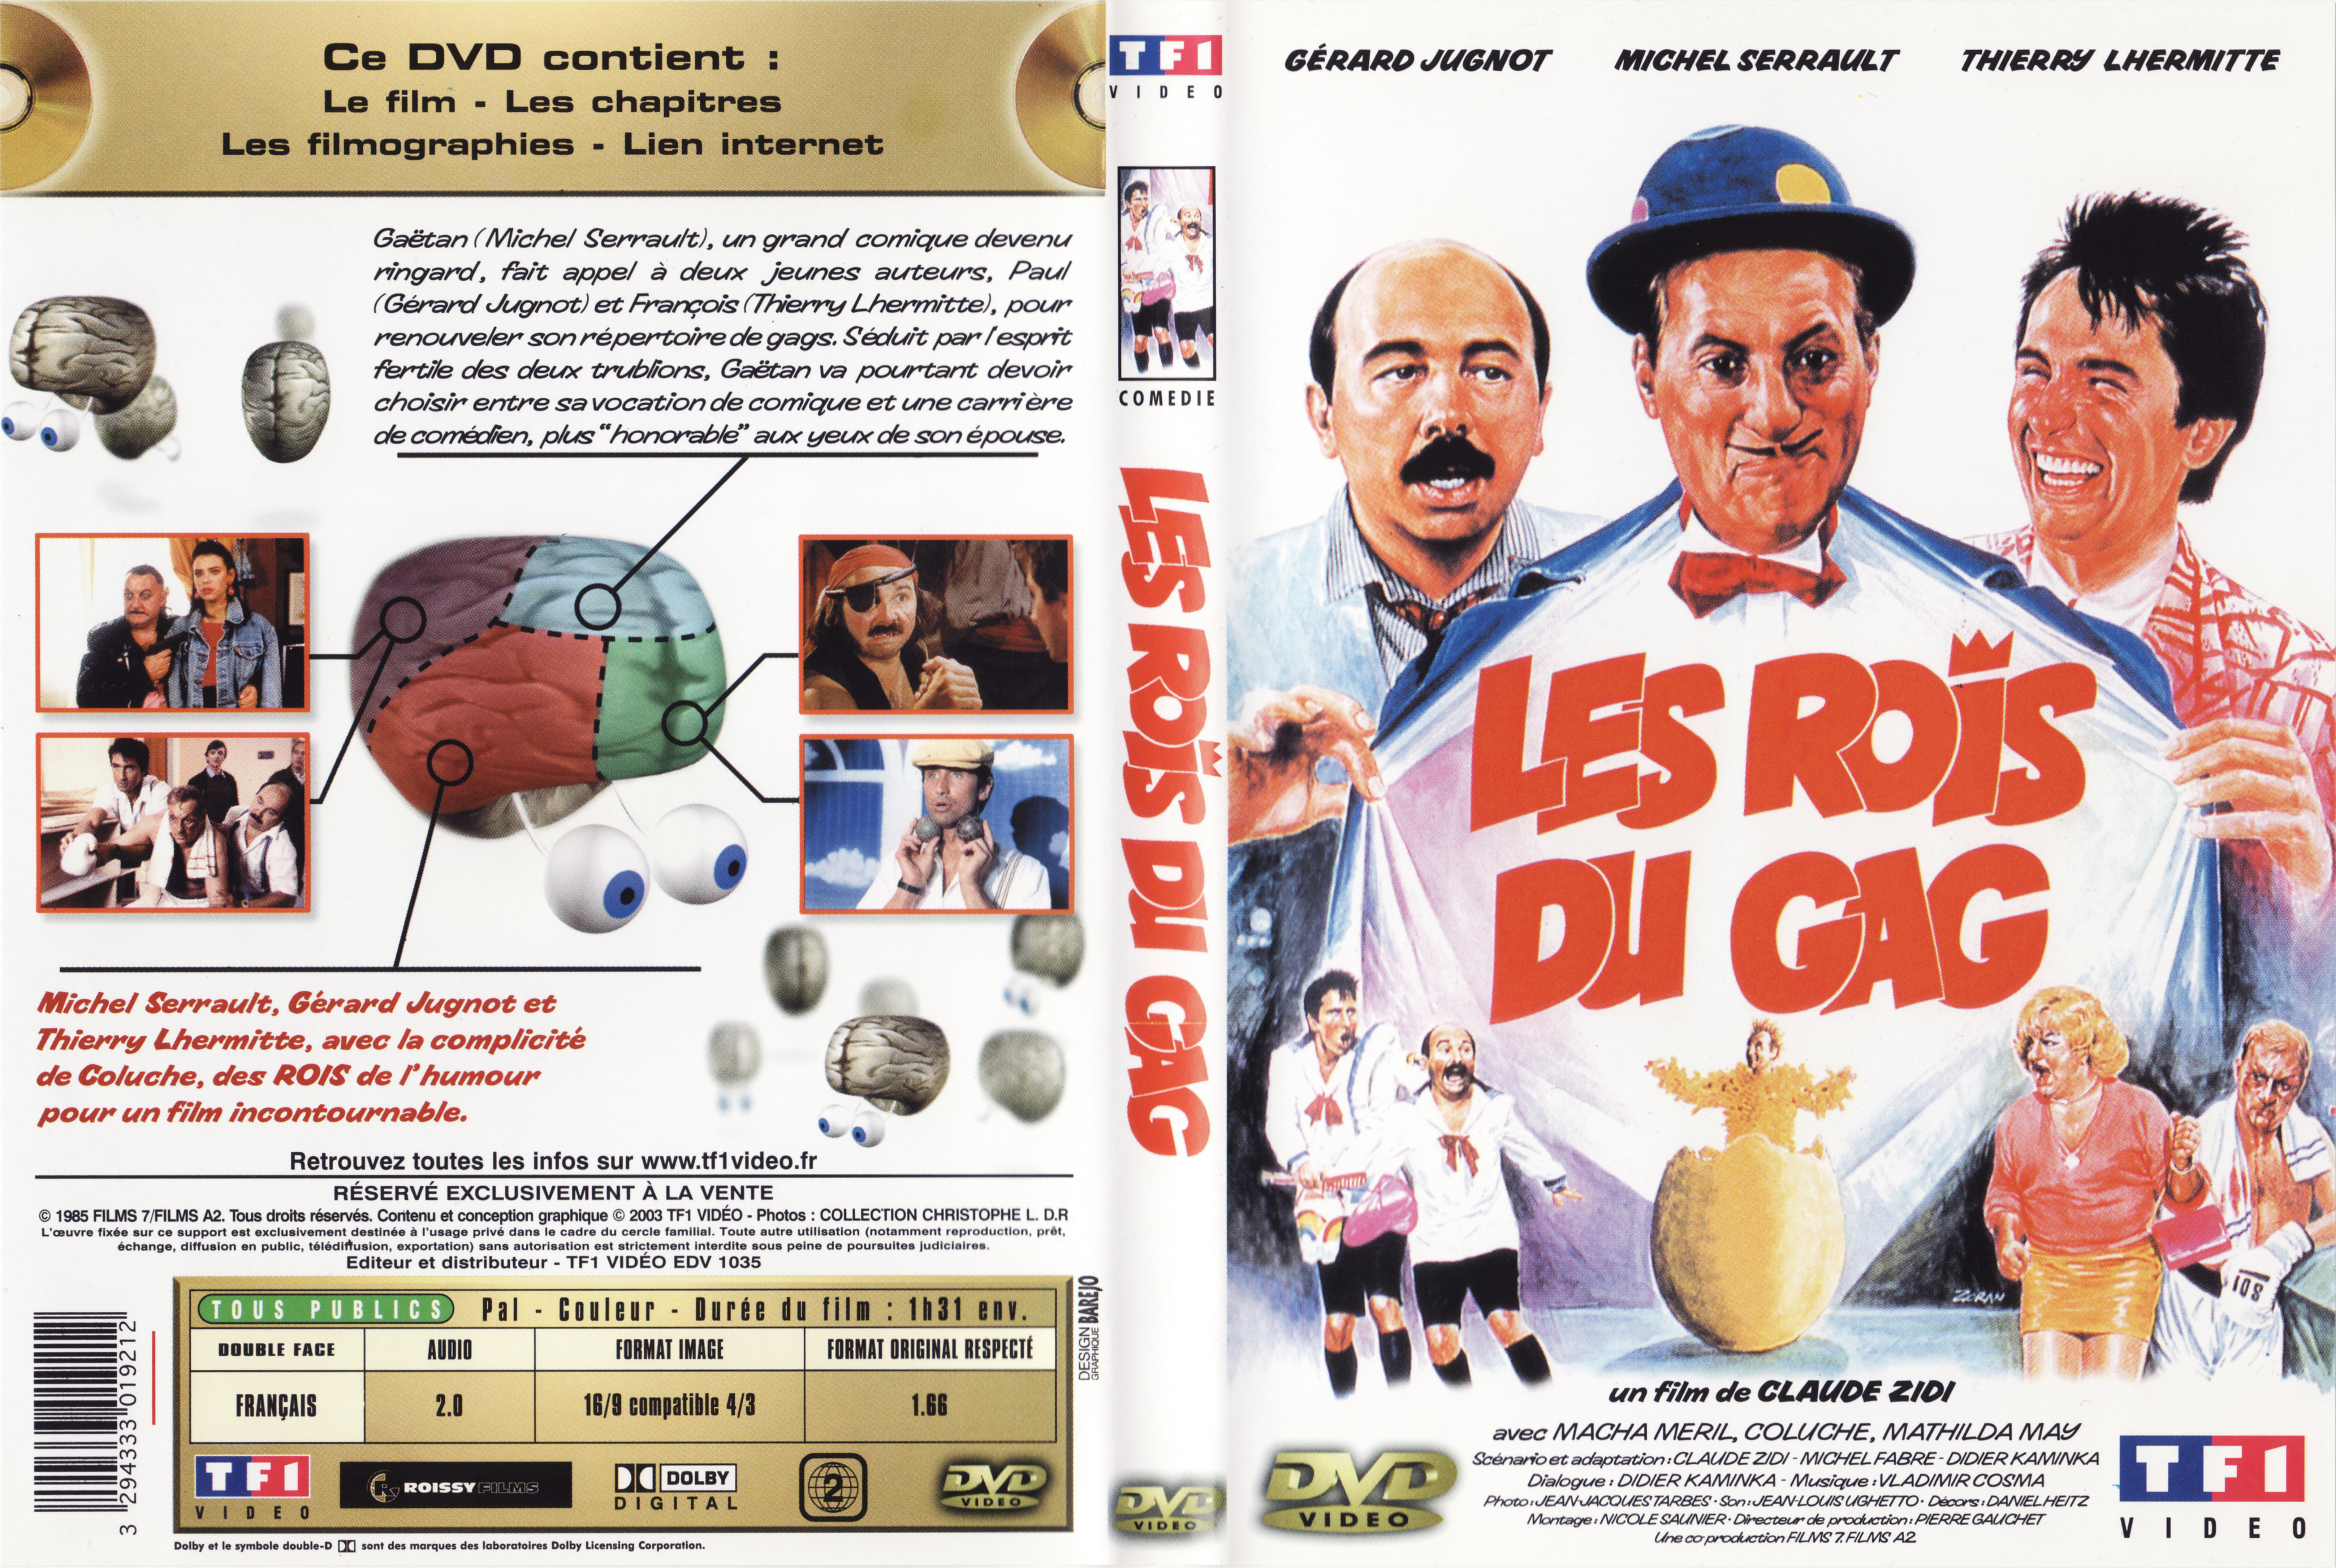 Jaquette DVD Les rois du gag v2